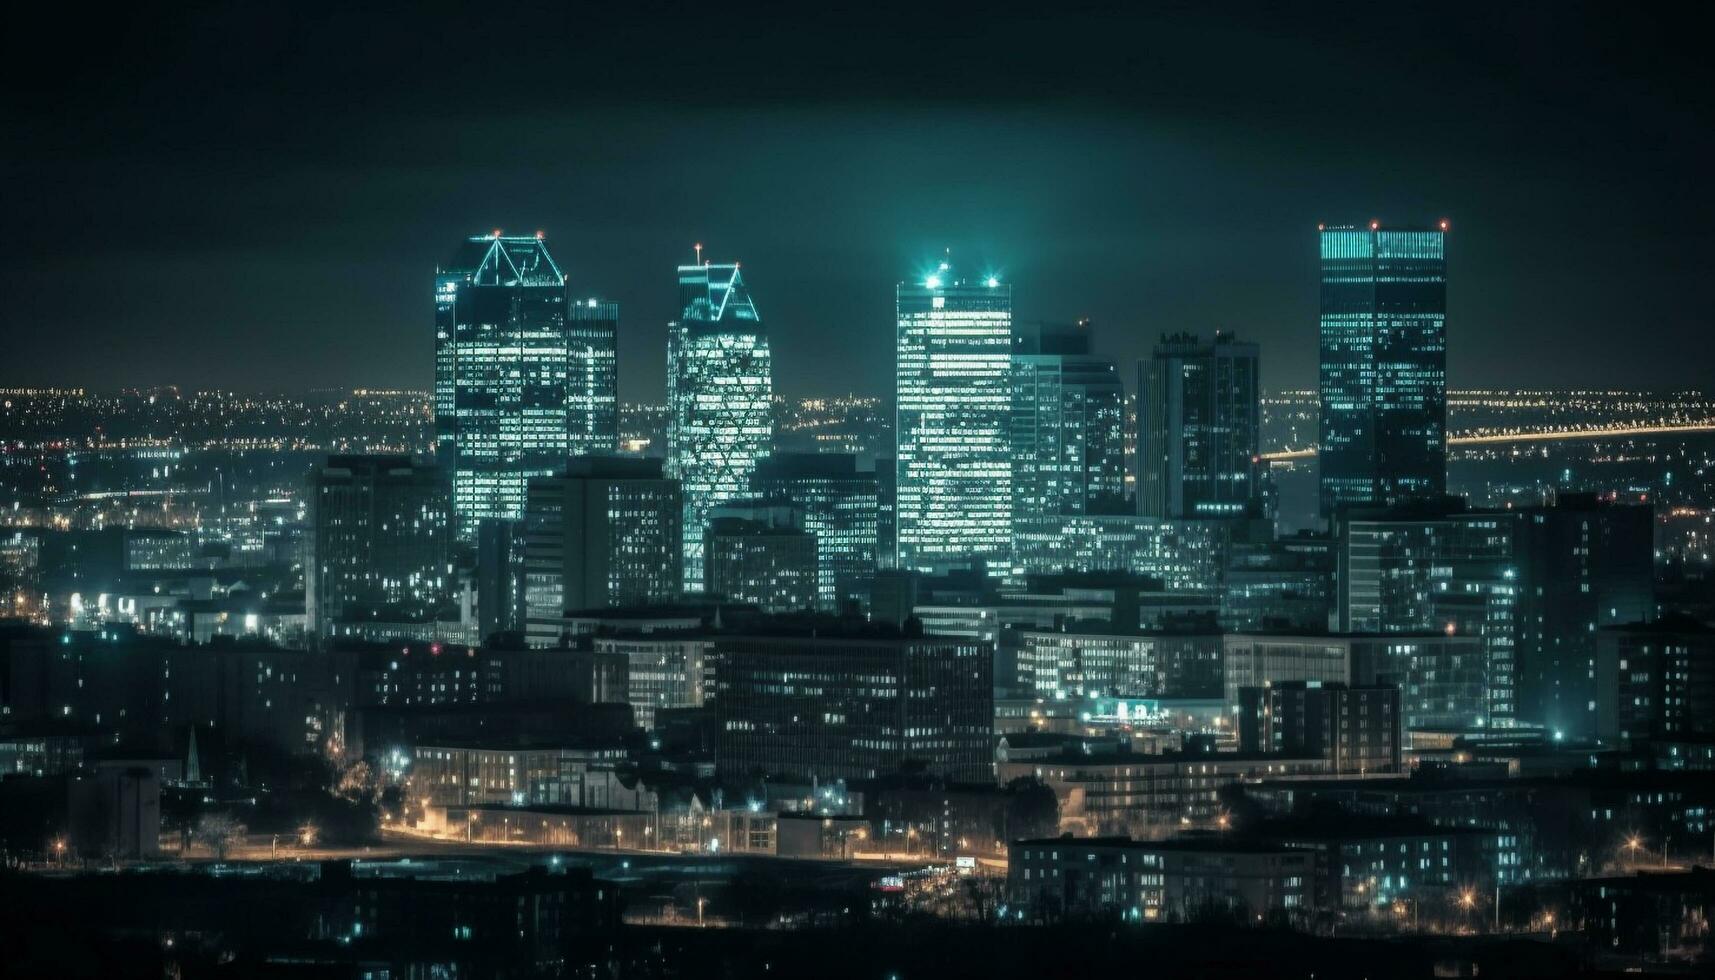 Glowing Beijing skyscrapers illuminate the futuristic cityscape generated by AI photo